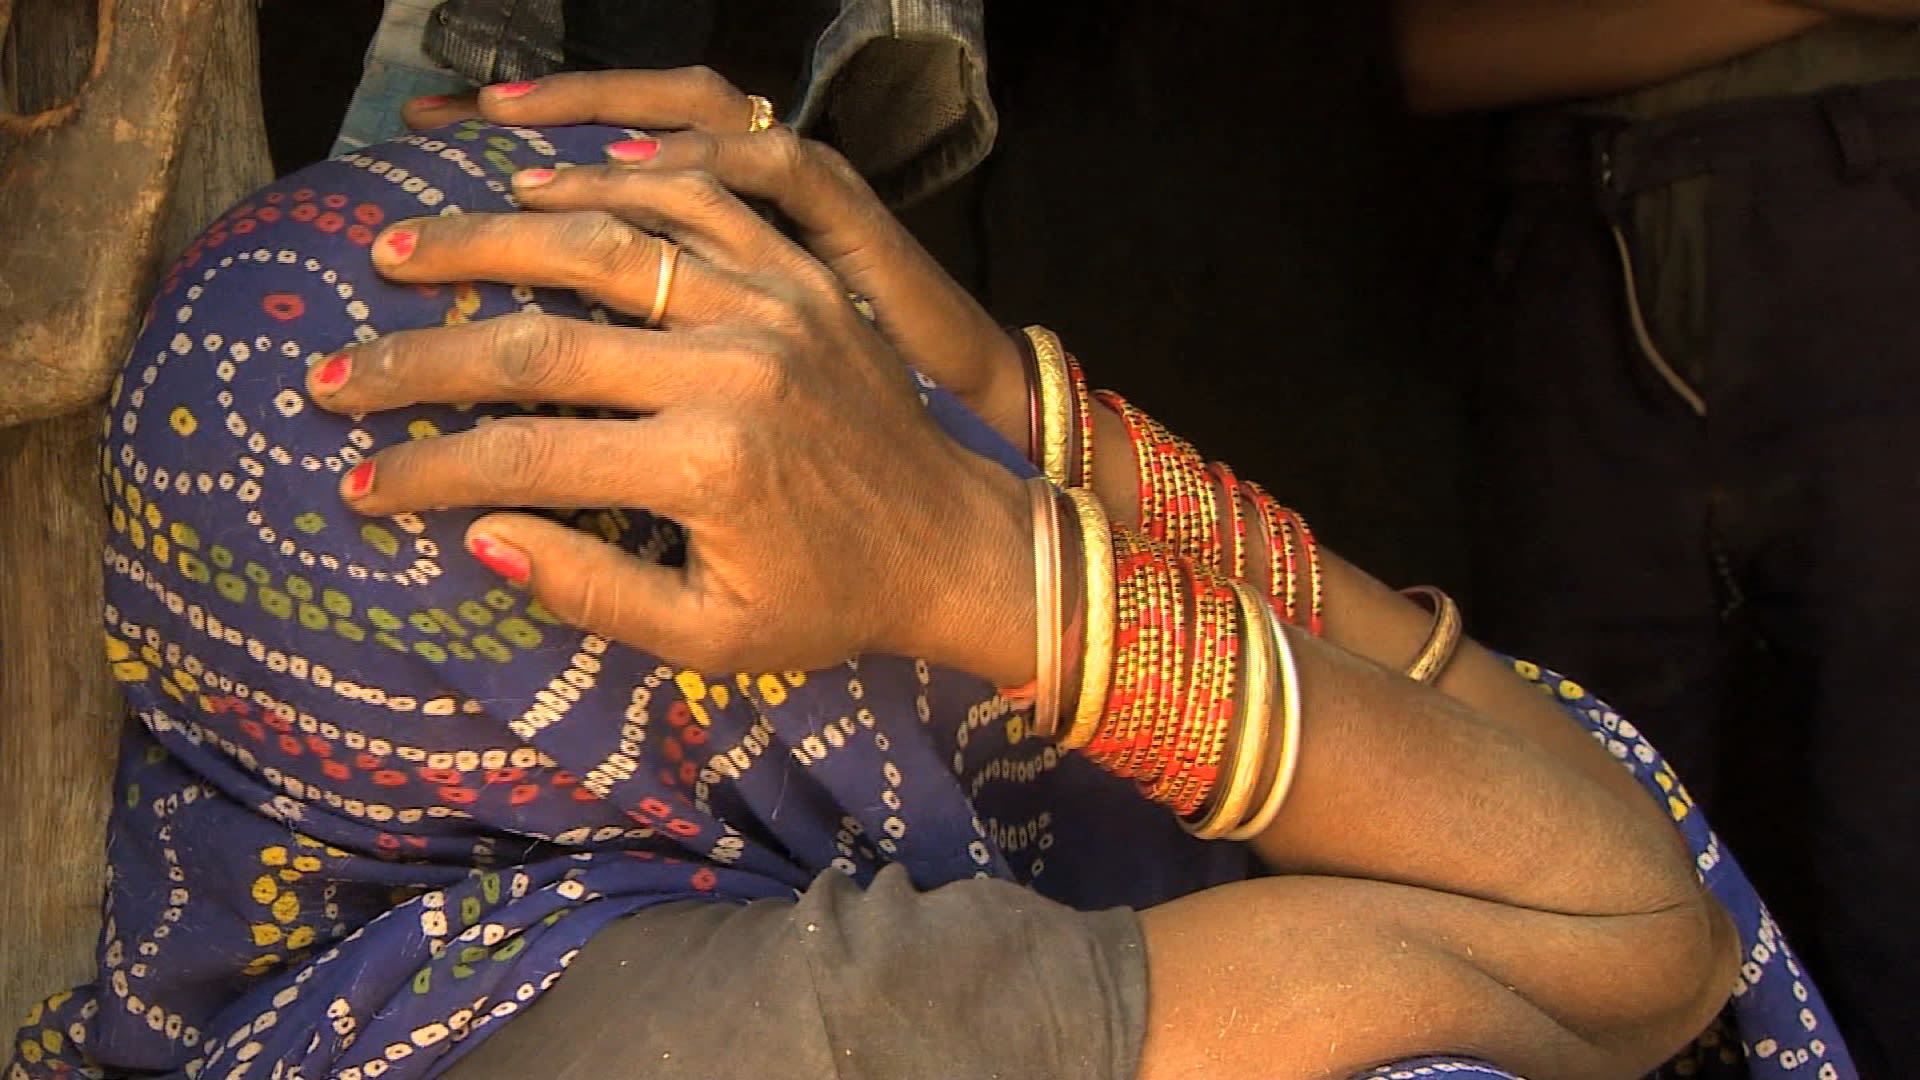 Jungle Mein Gang Rape Rape Sex - Rape in India: How a child's murder revealed the problems facing modern  India | CNN